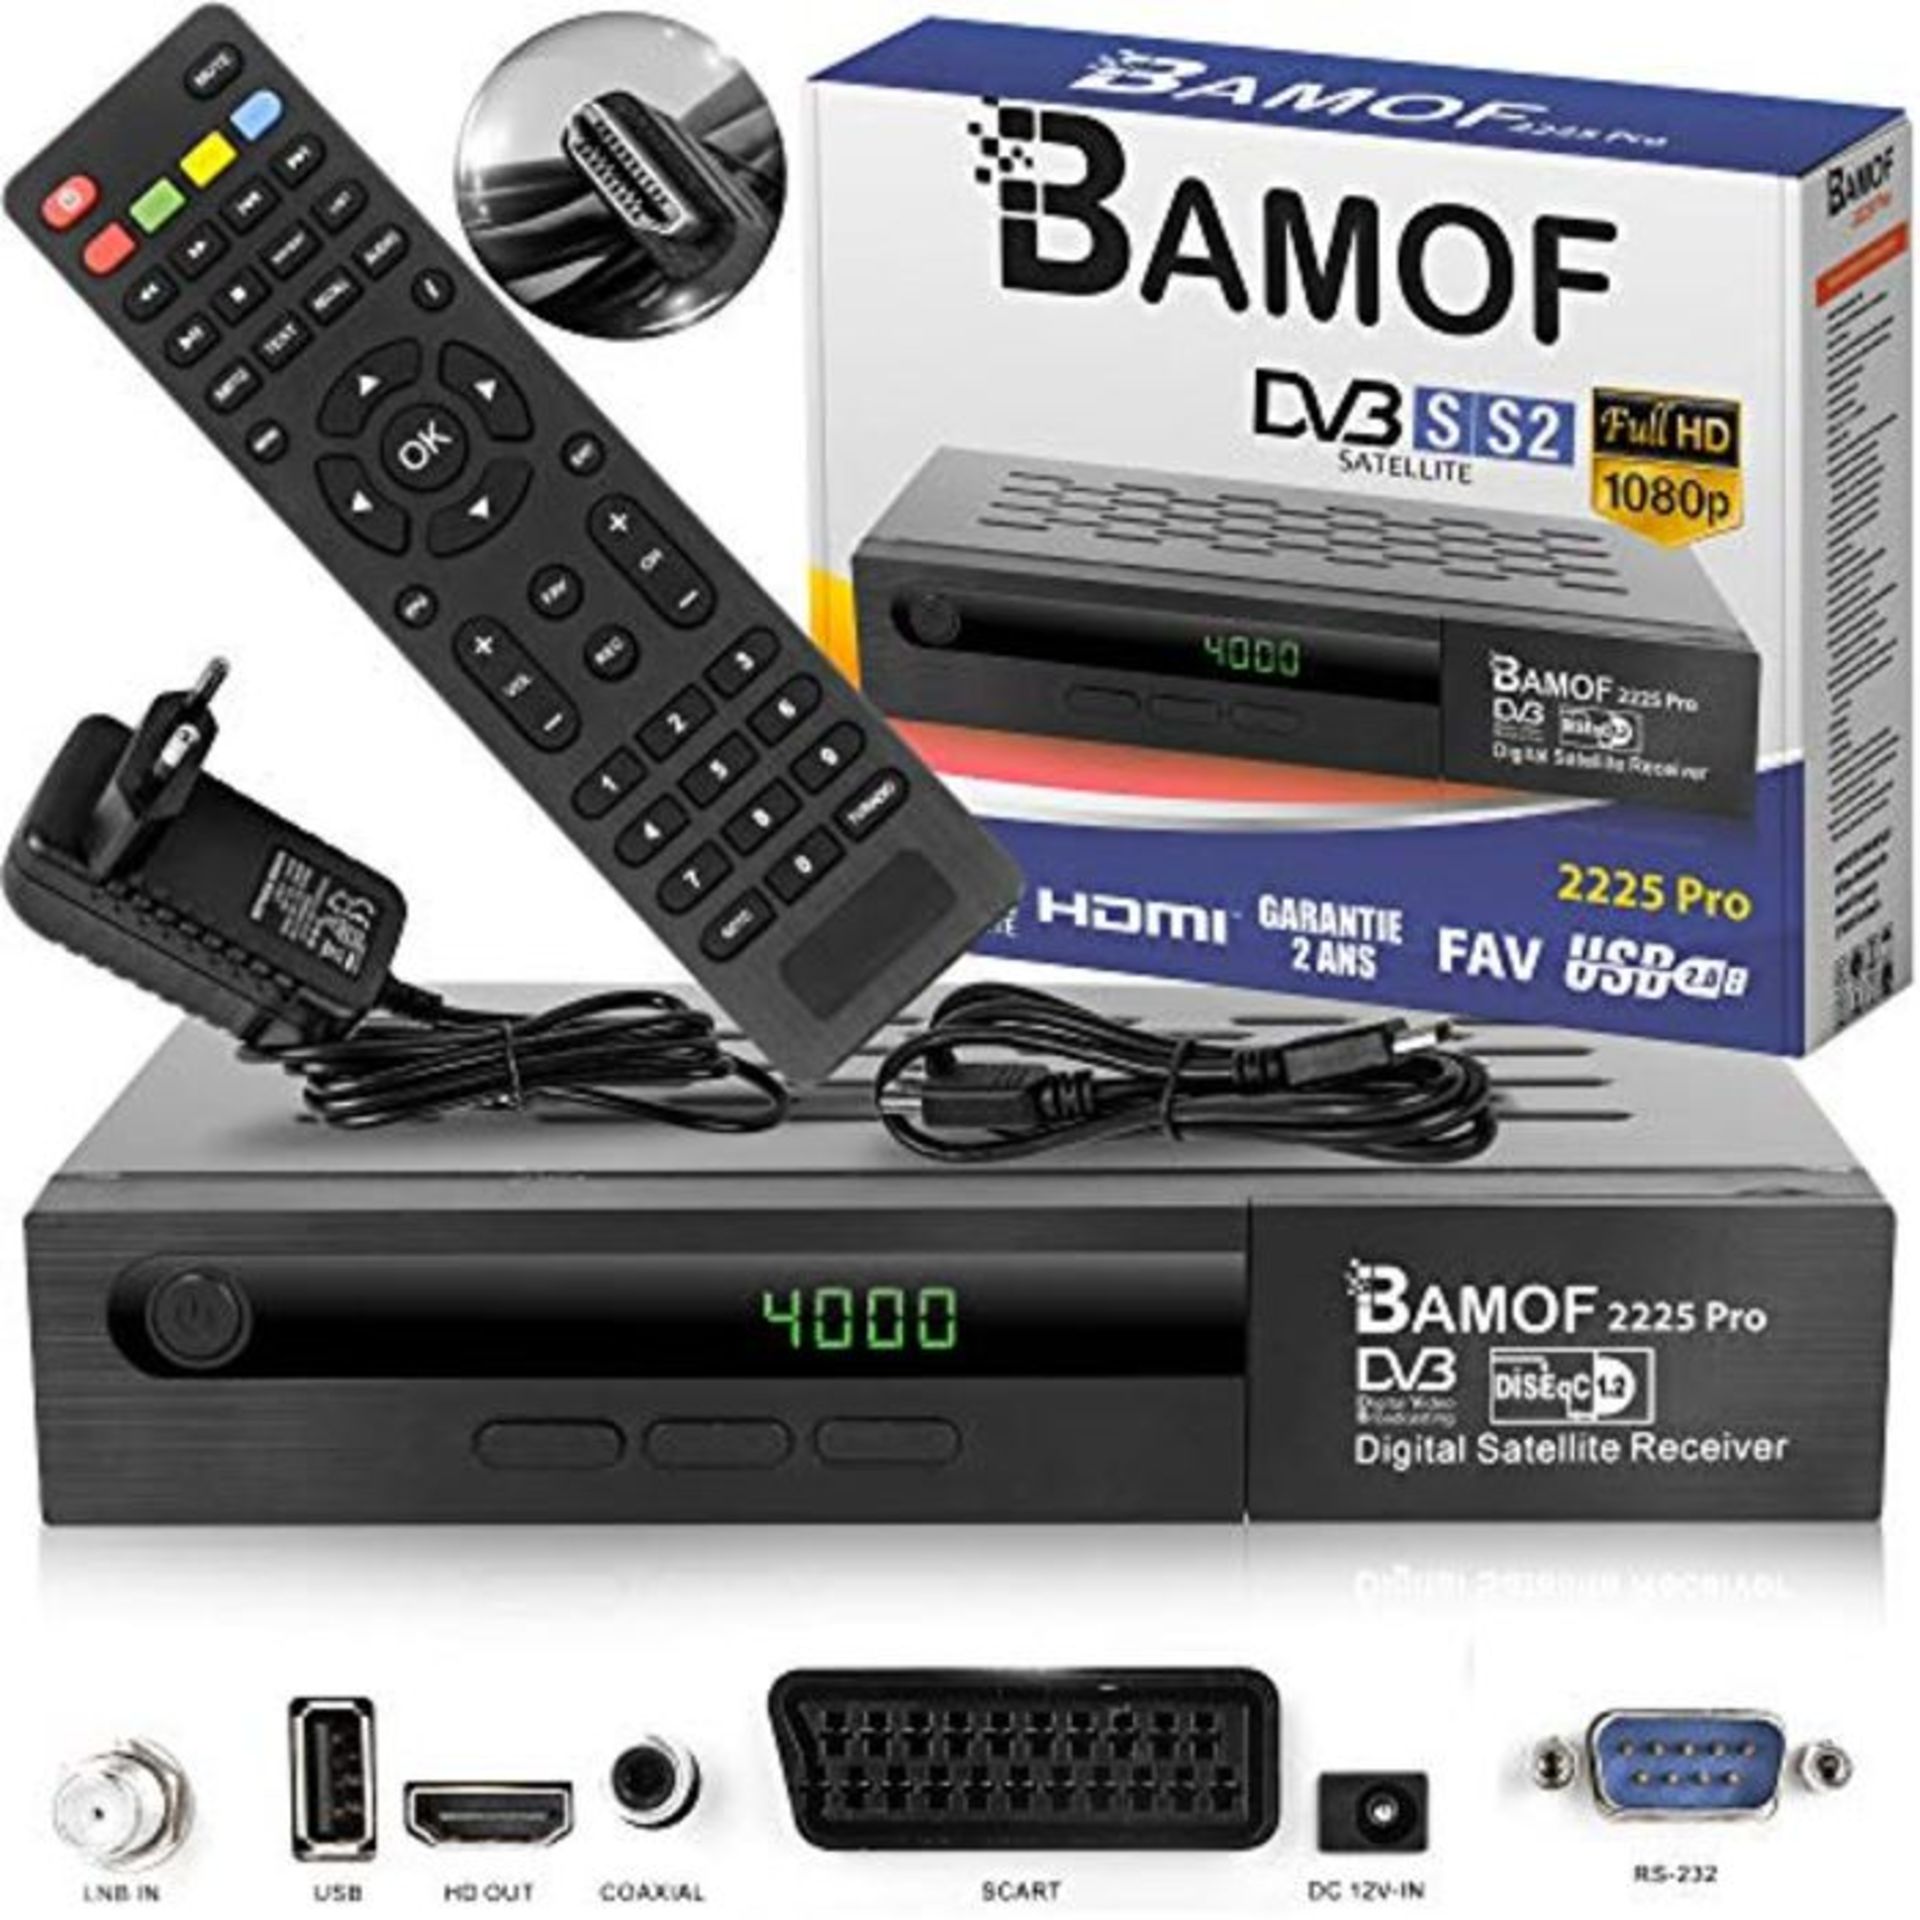 Bamof 2225 PRO Sat Receiver Digitaler Satelliten Receiver- (HDTV, DVB-S /DVB-S2, HDMI,